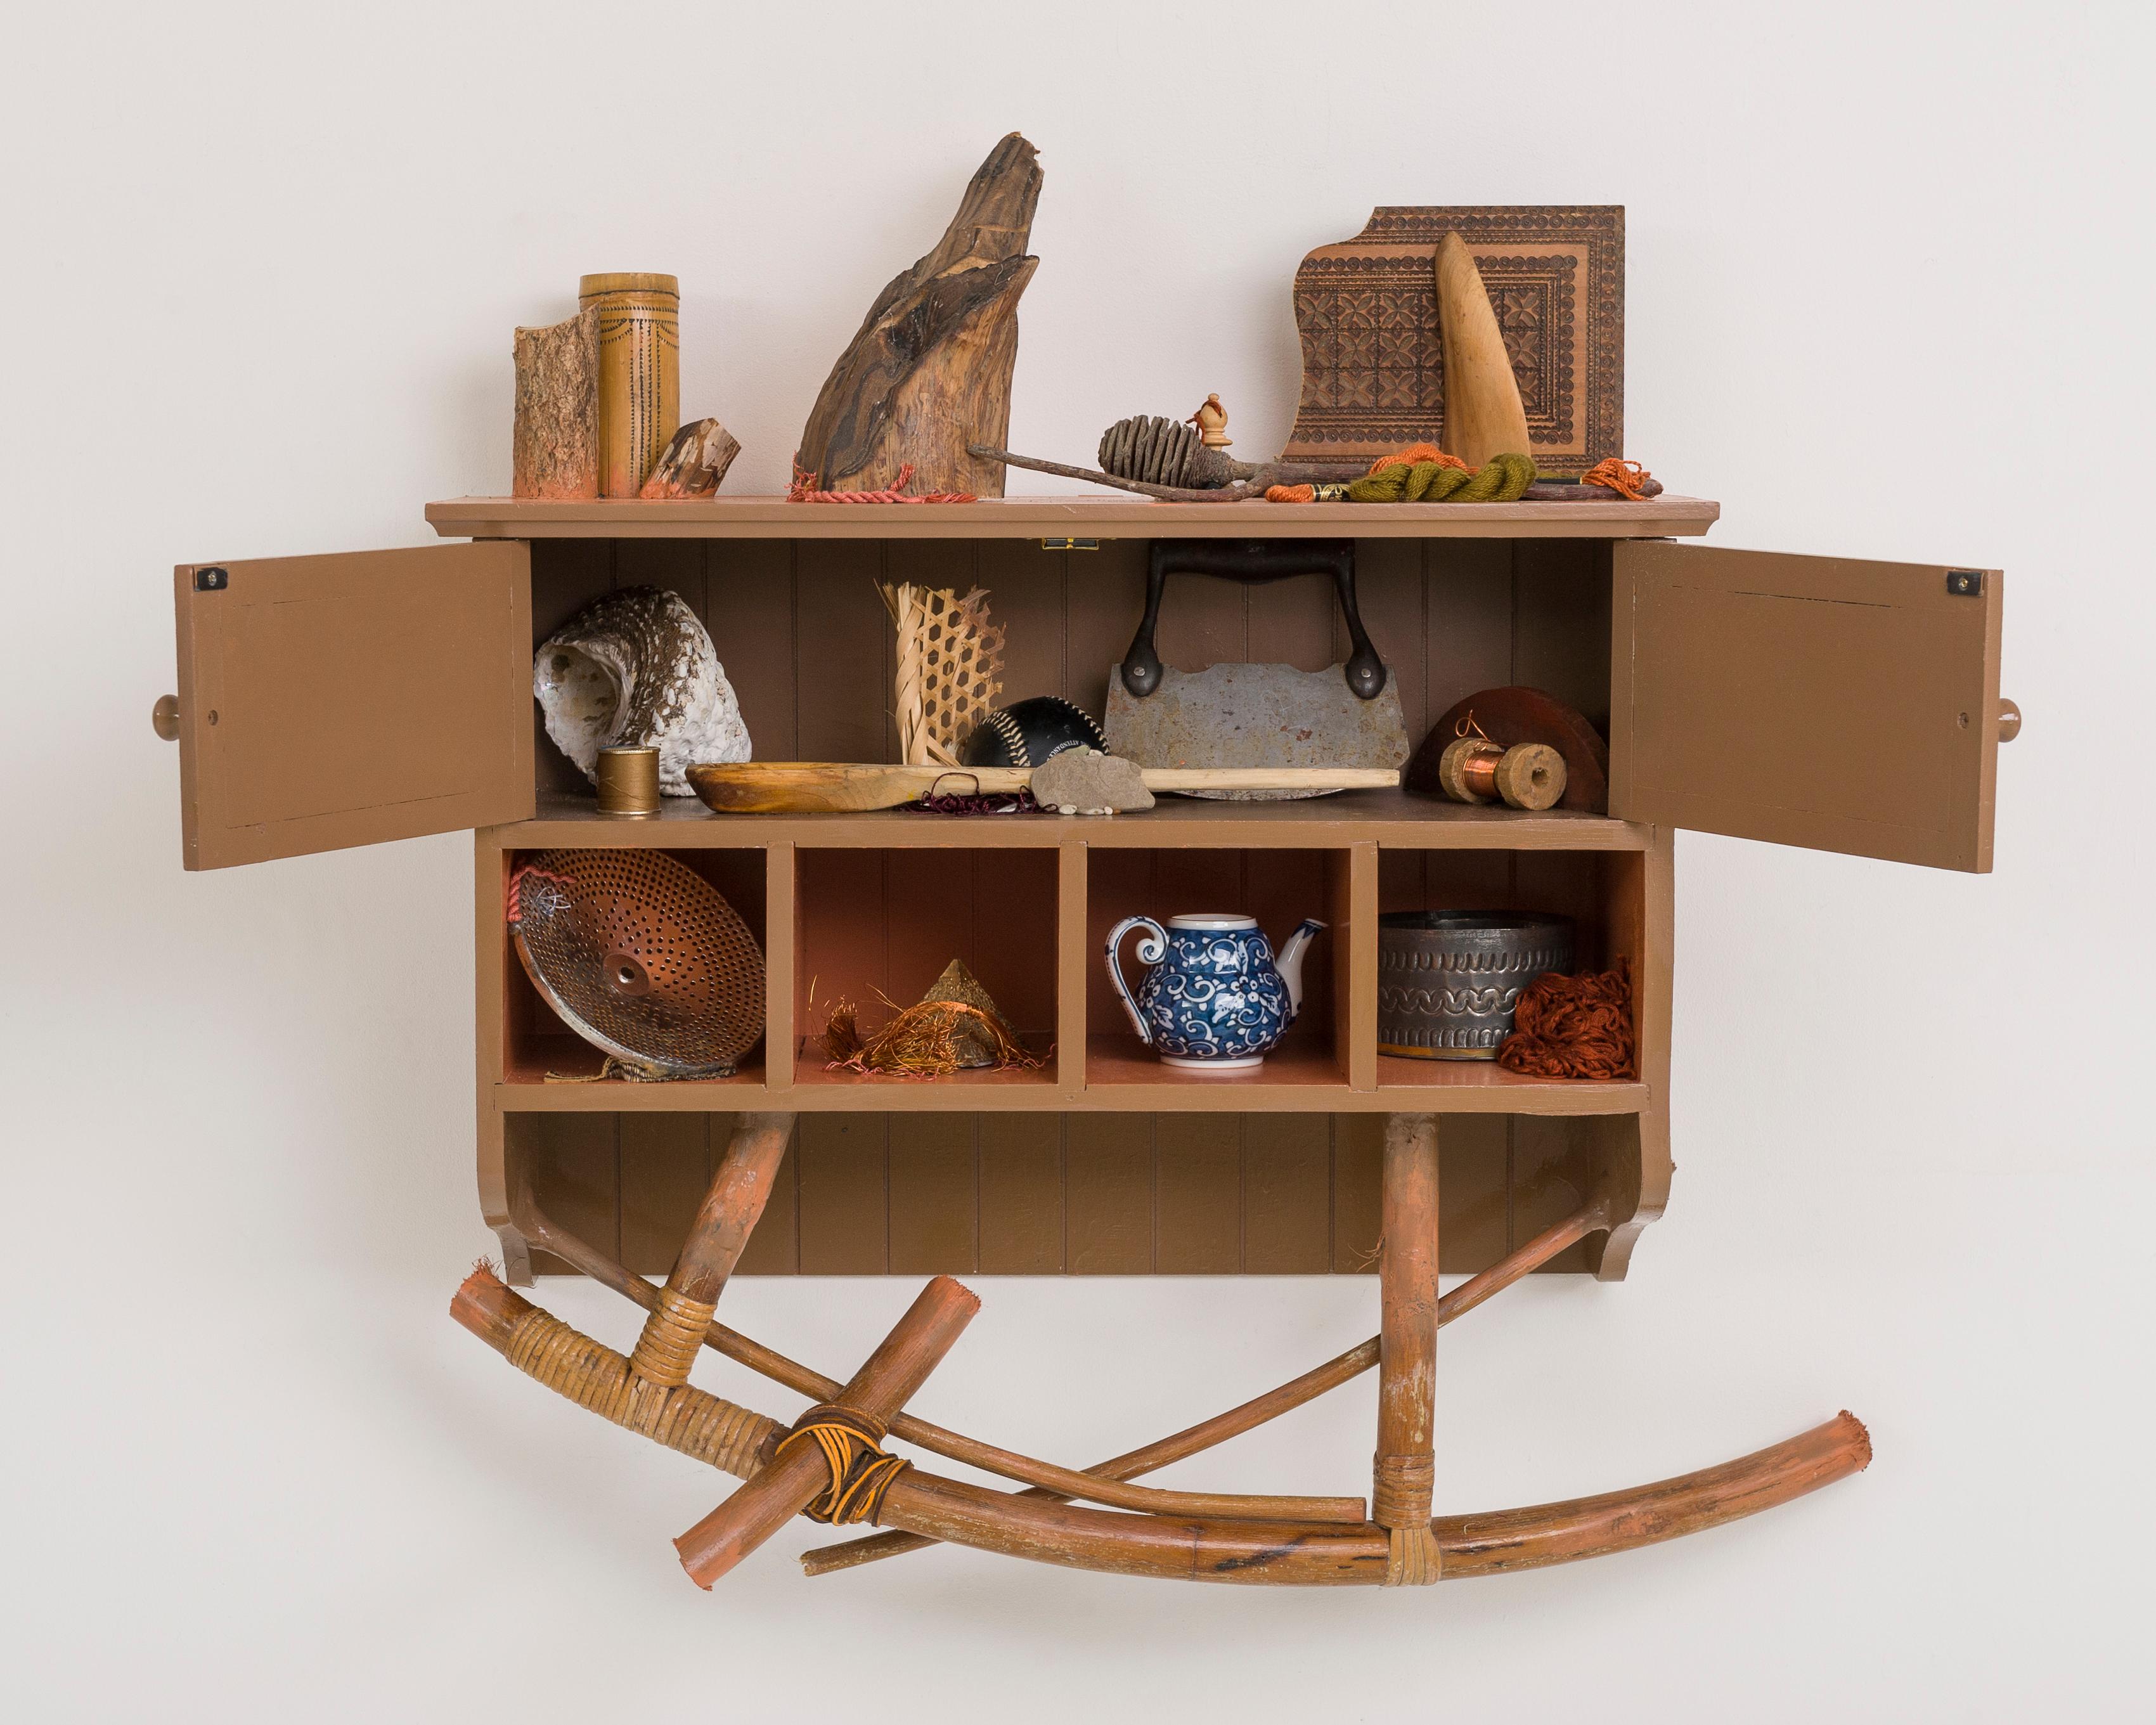 Linda Stein Abstract Sculpture - Cupboard with Teapot 924 - Cabinet of Curiosities, Wunderkammer Art Sculpture